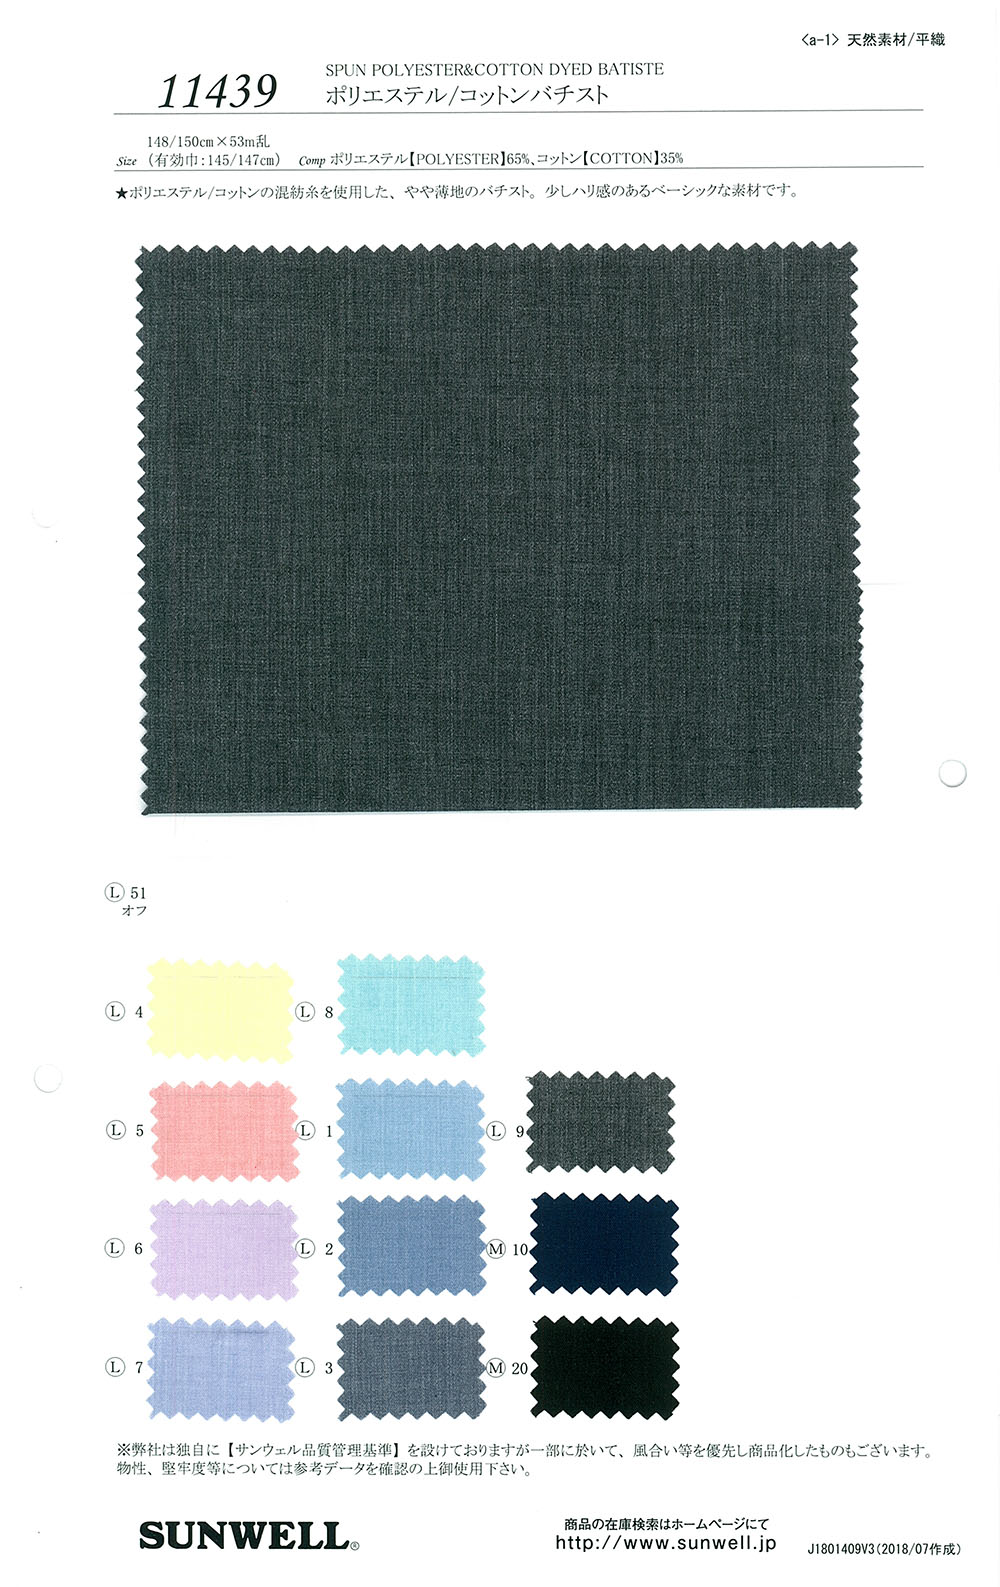 11439 Polyester/Baumwoll-Batist[Textilgewebe] SUNWELL